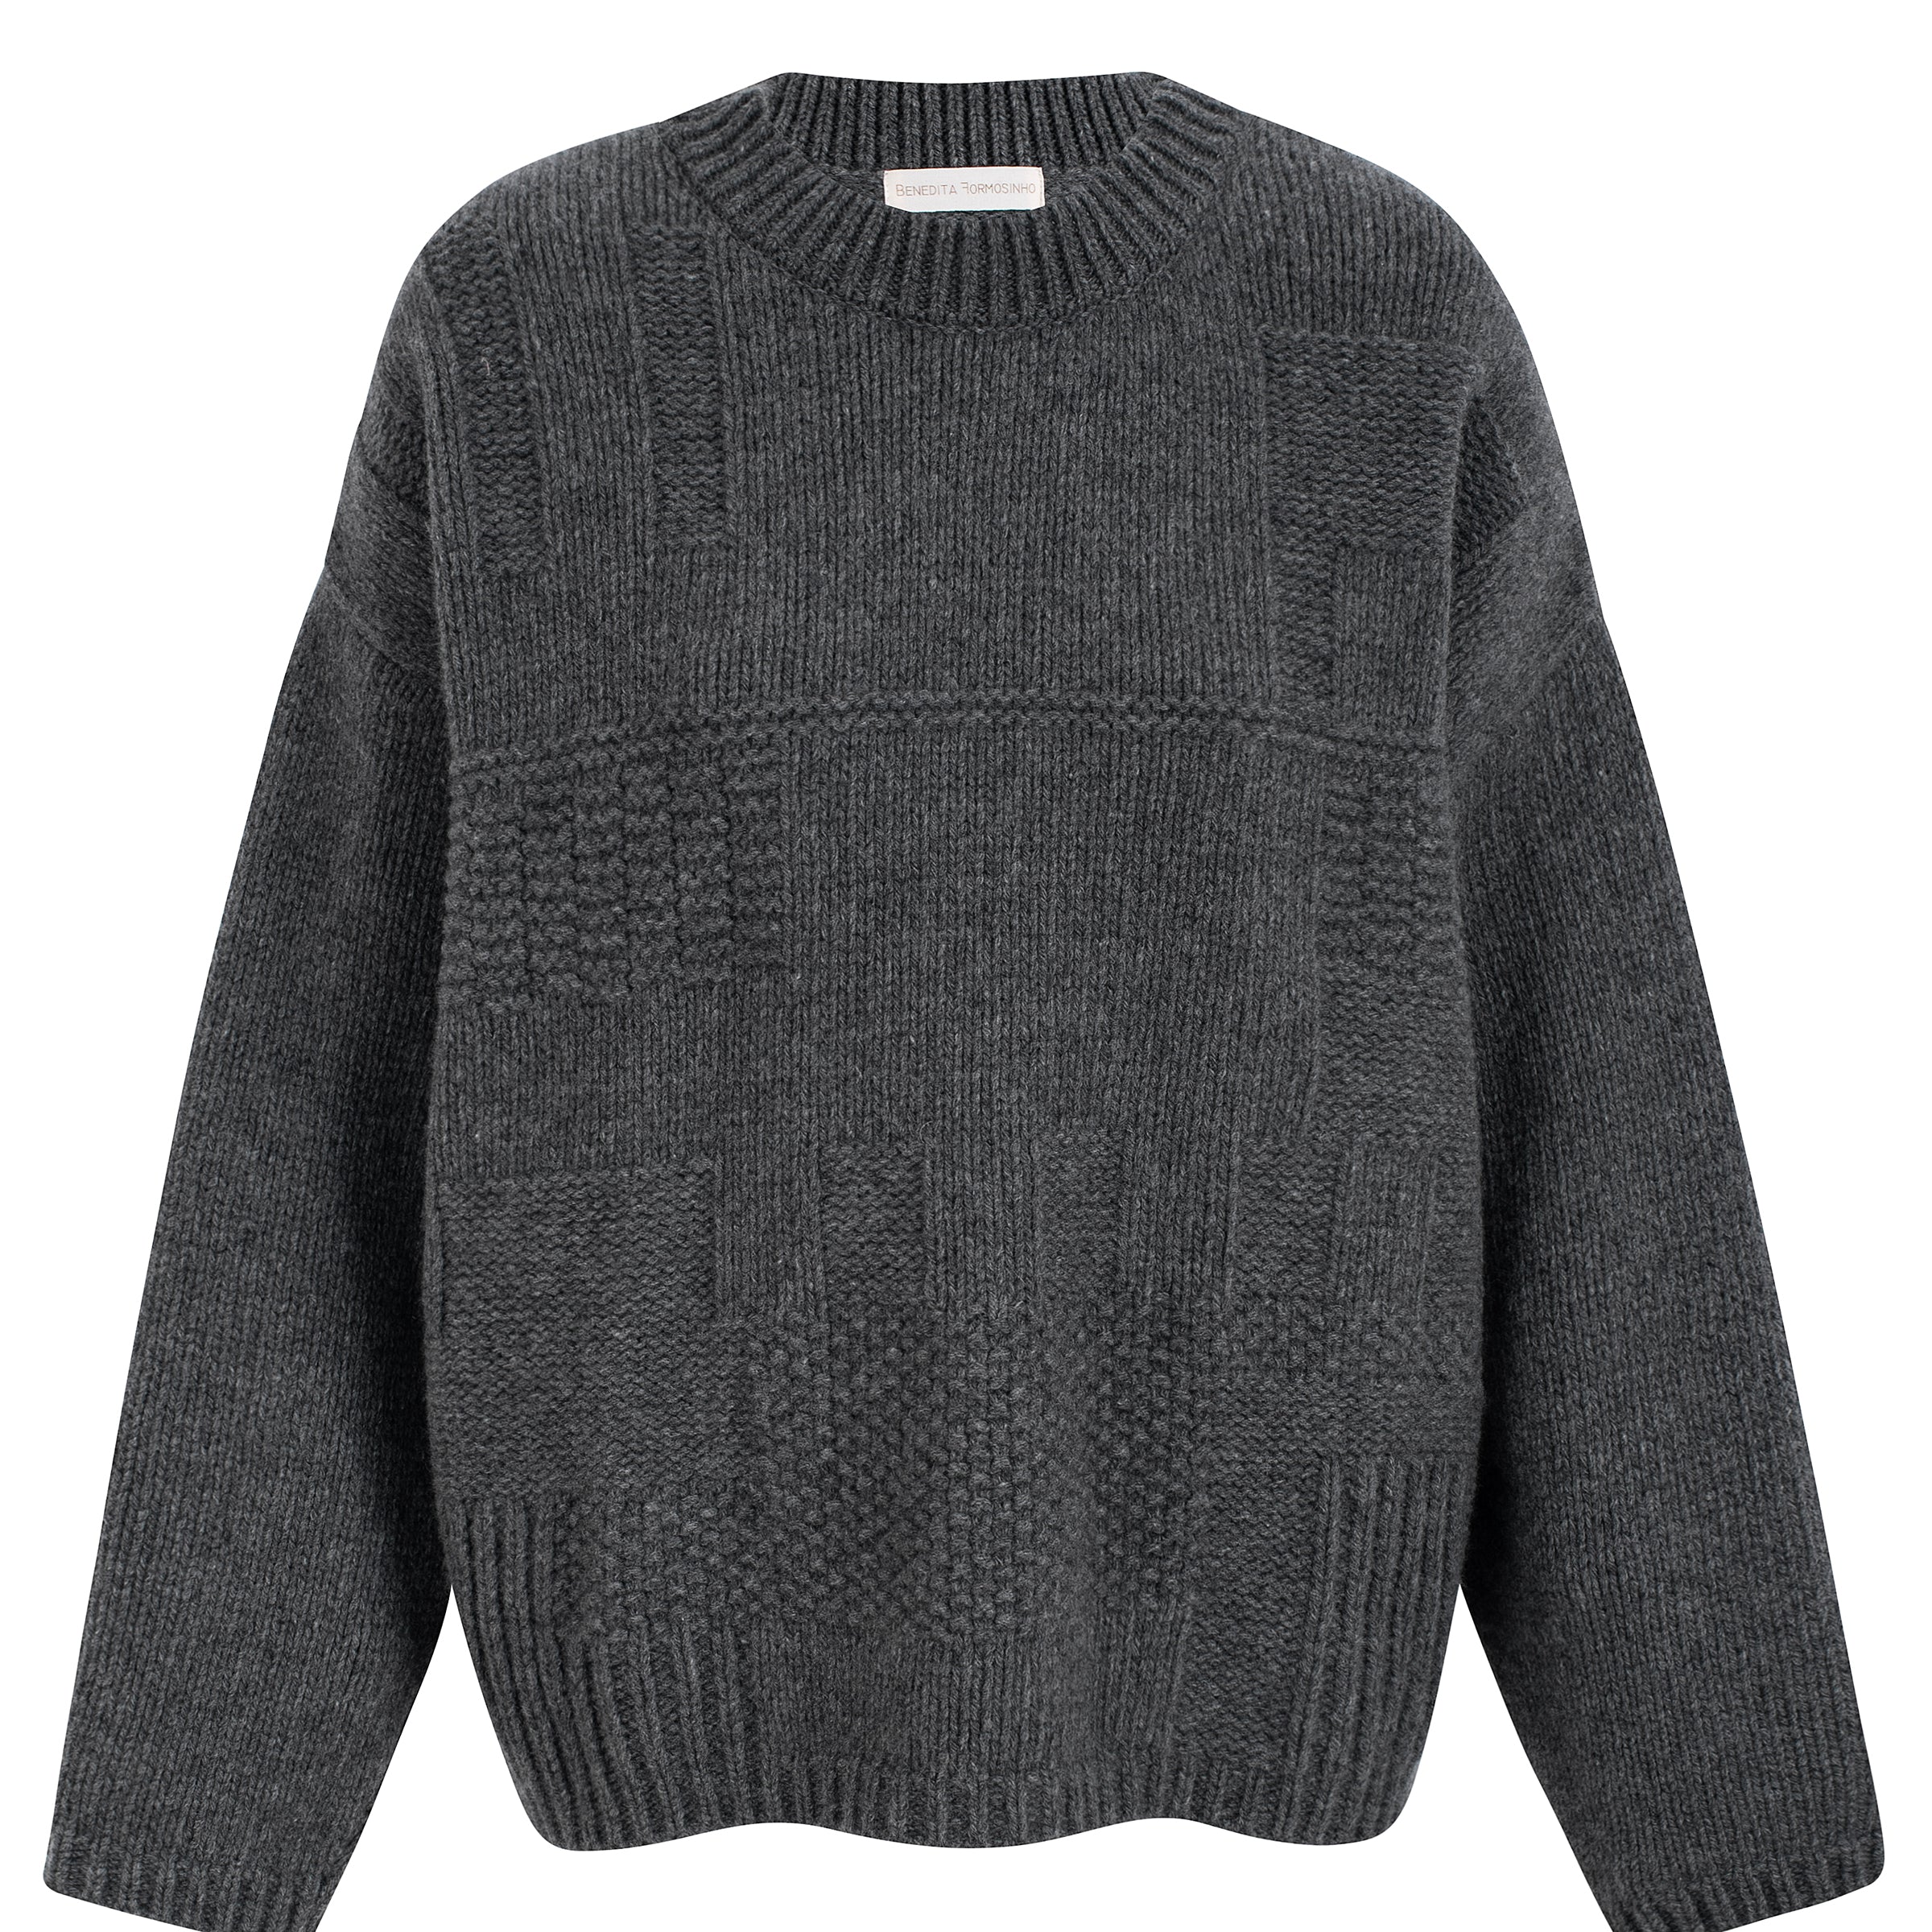 CLARA FERNANDO knit sweater